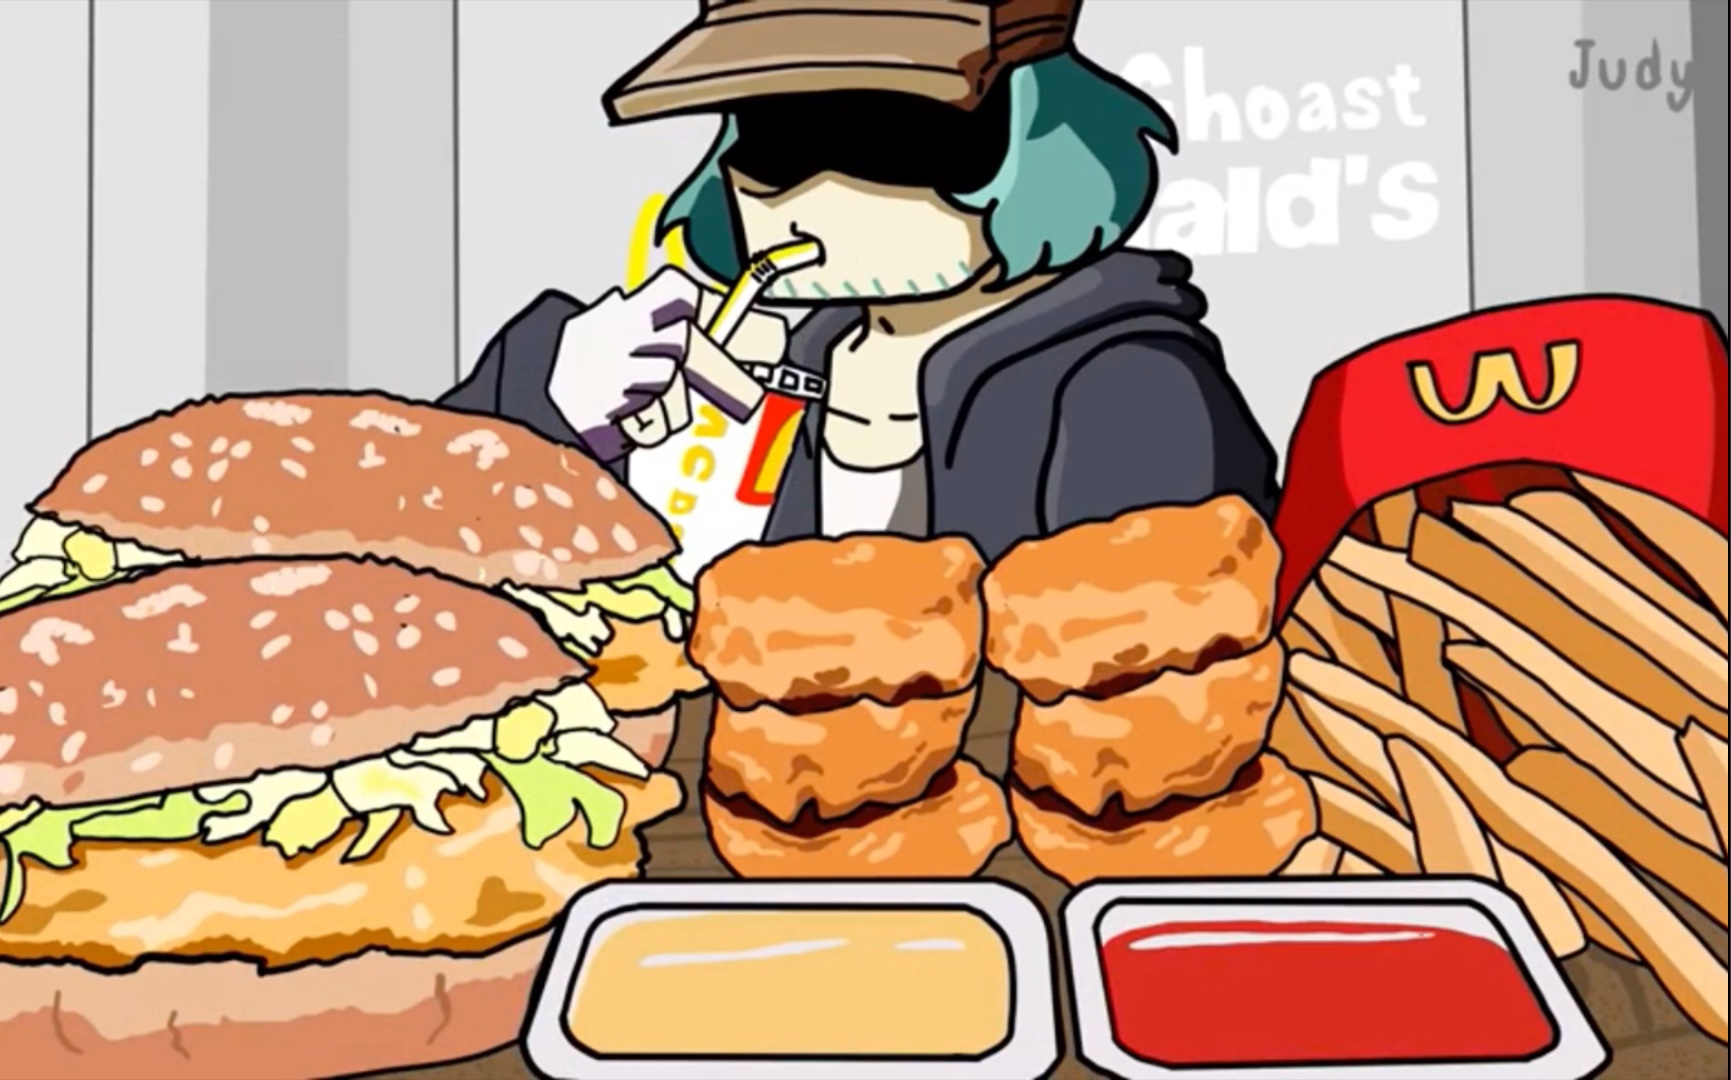 McDonalds As An Anime Girl by BaronDeluxe on DeviantArt